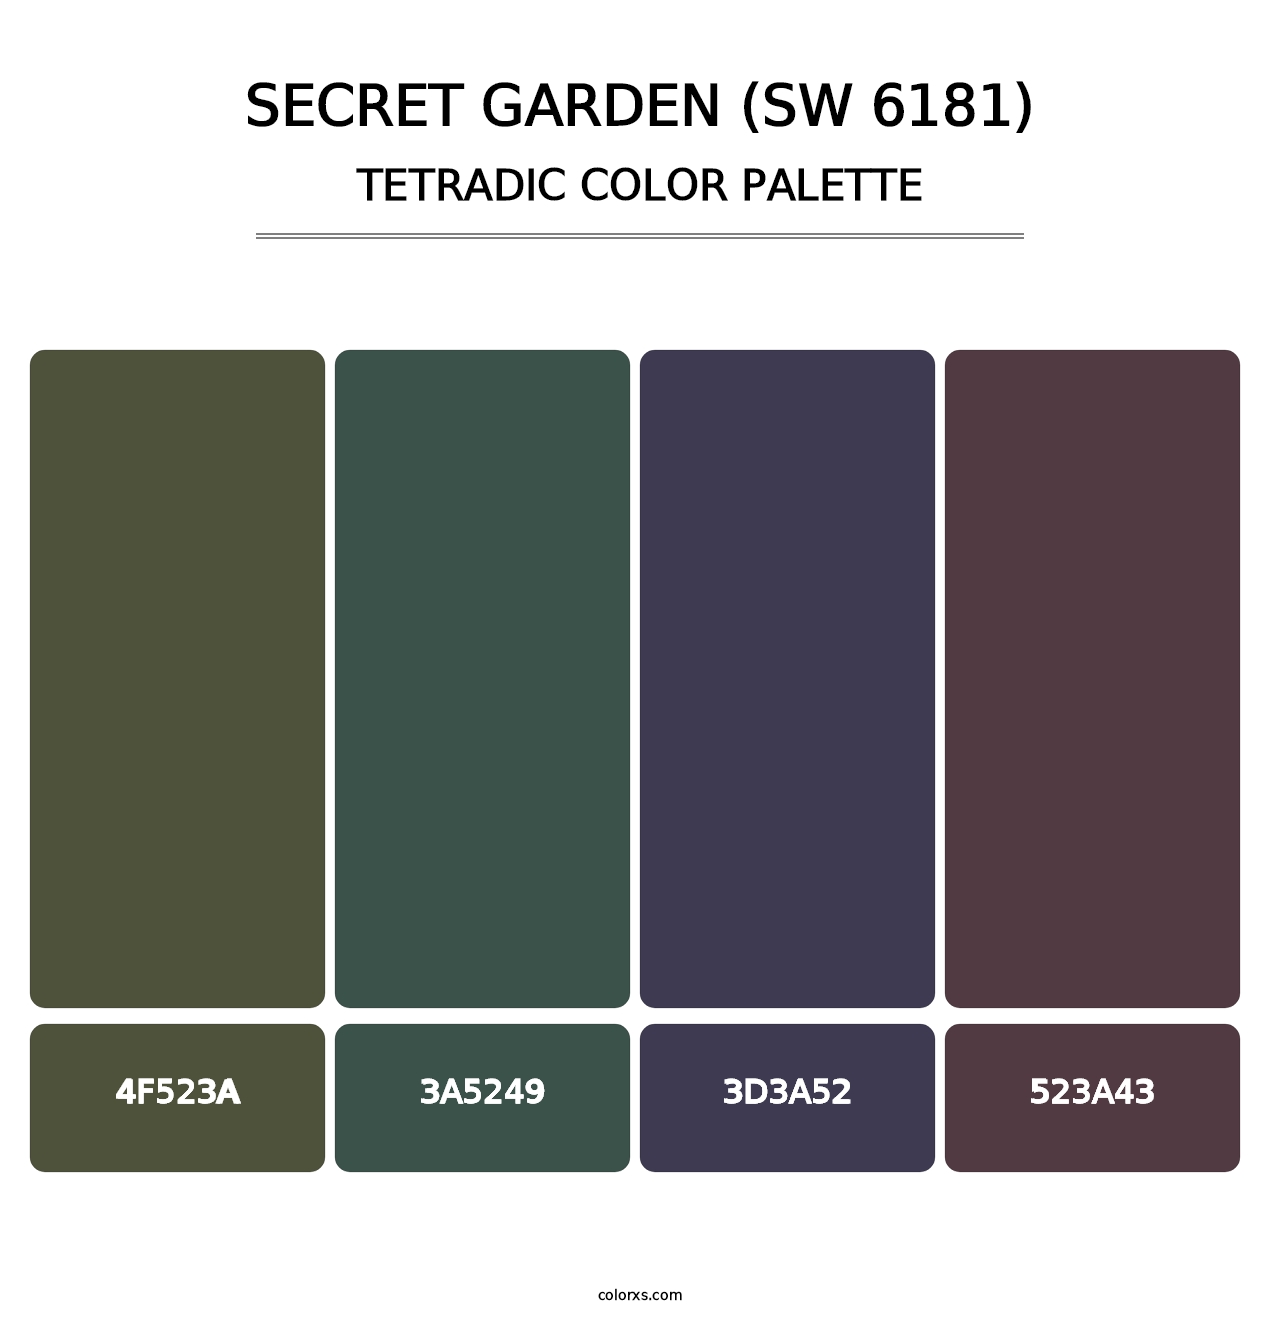 Secret Garden (SW 6181) - Tetradic Color Palette